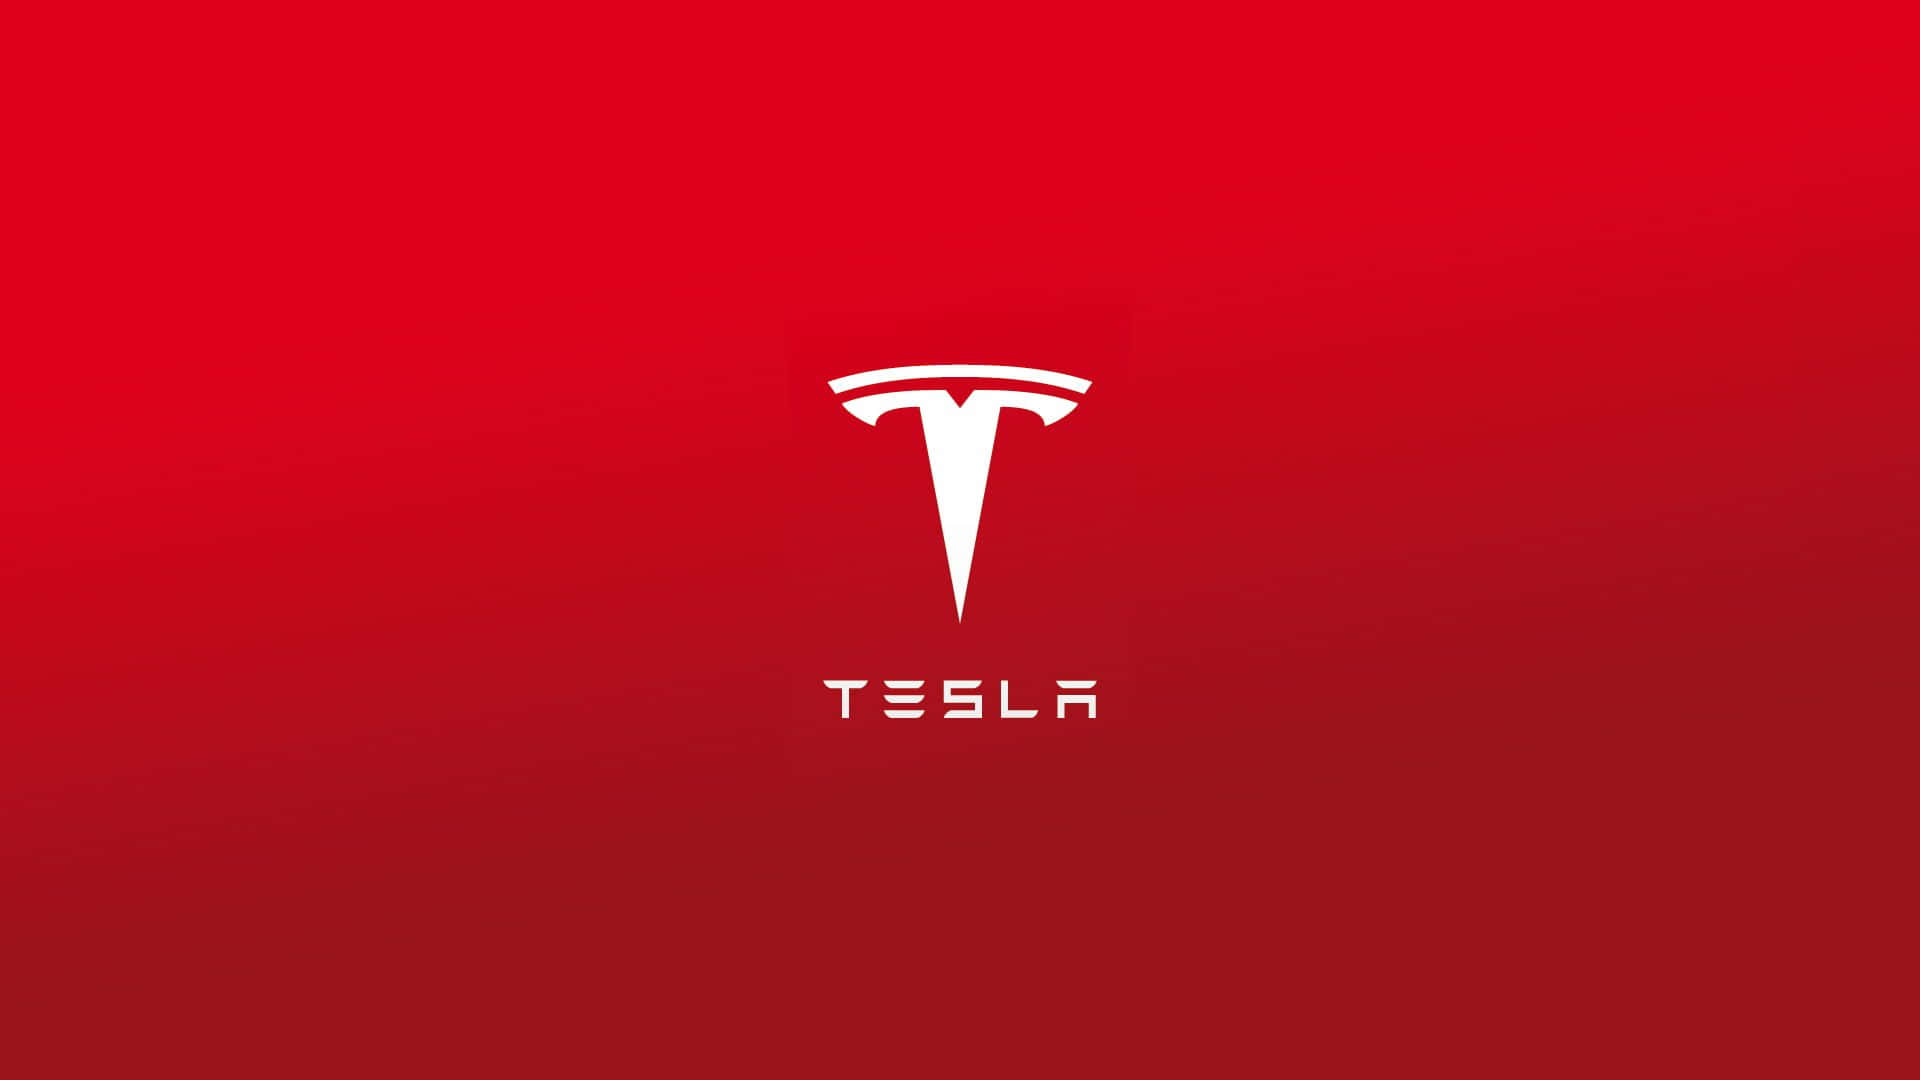 Tesla Background Wallpaper